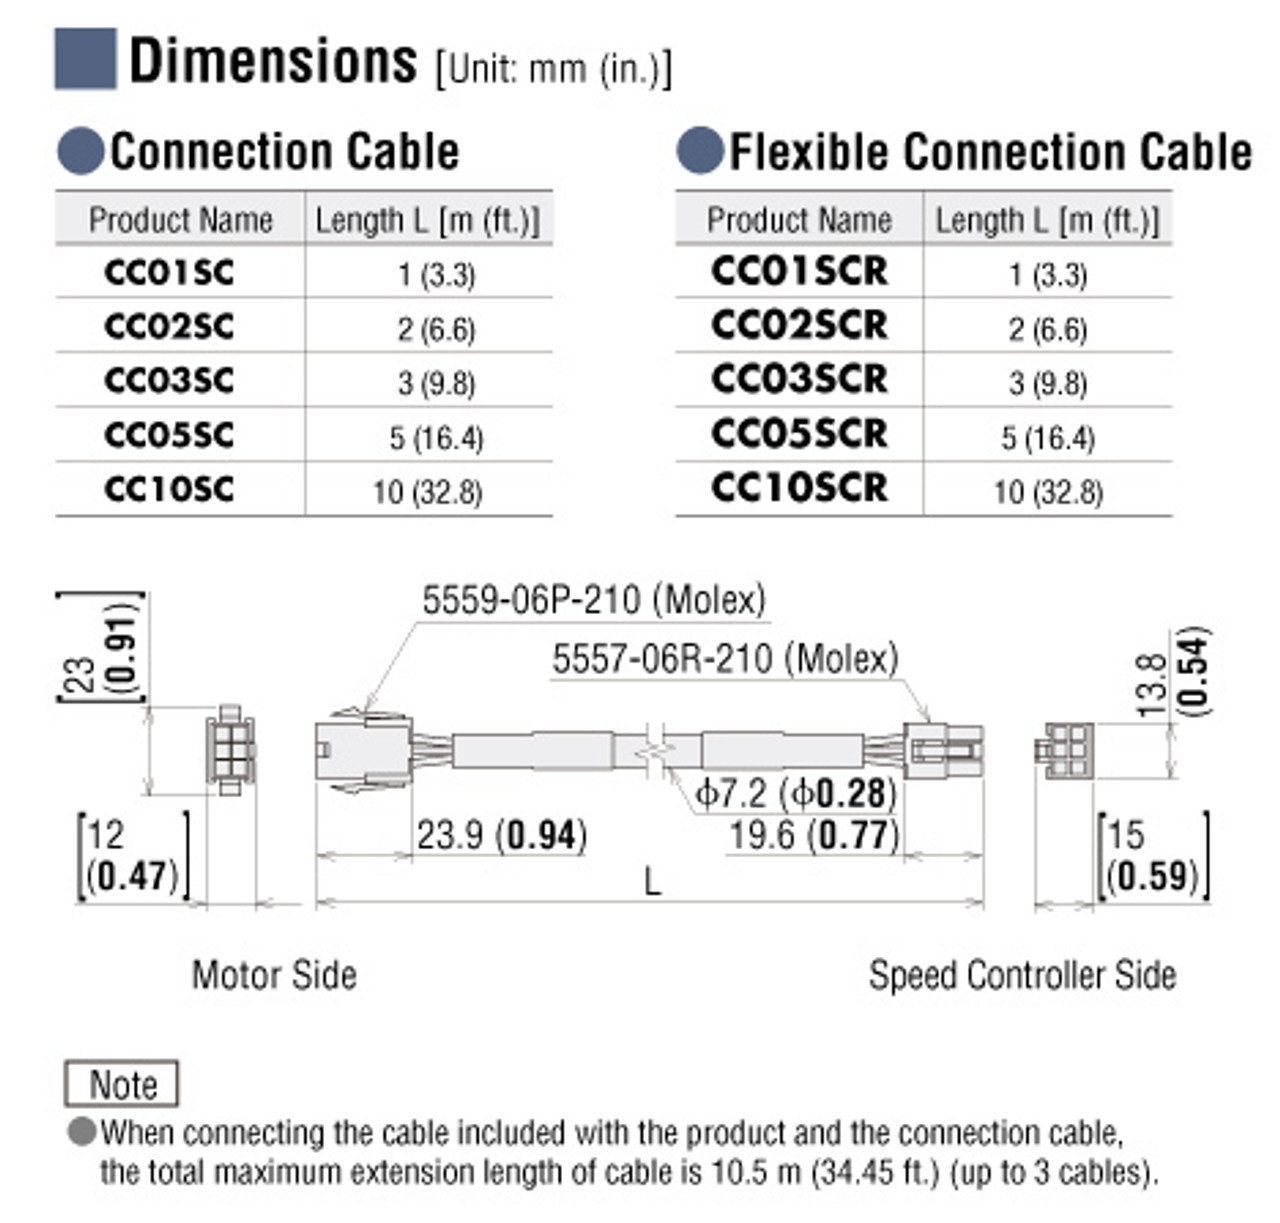 CC01SCR - Dimensions